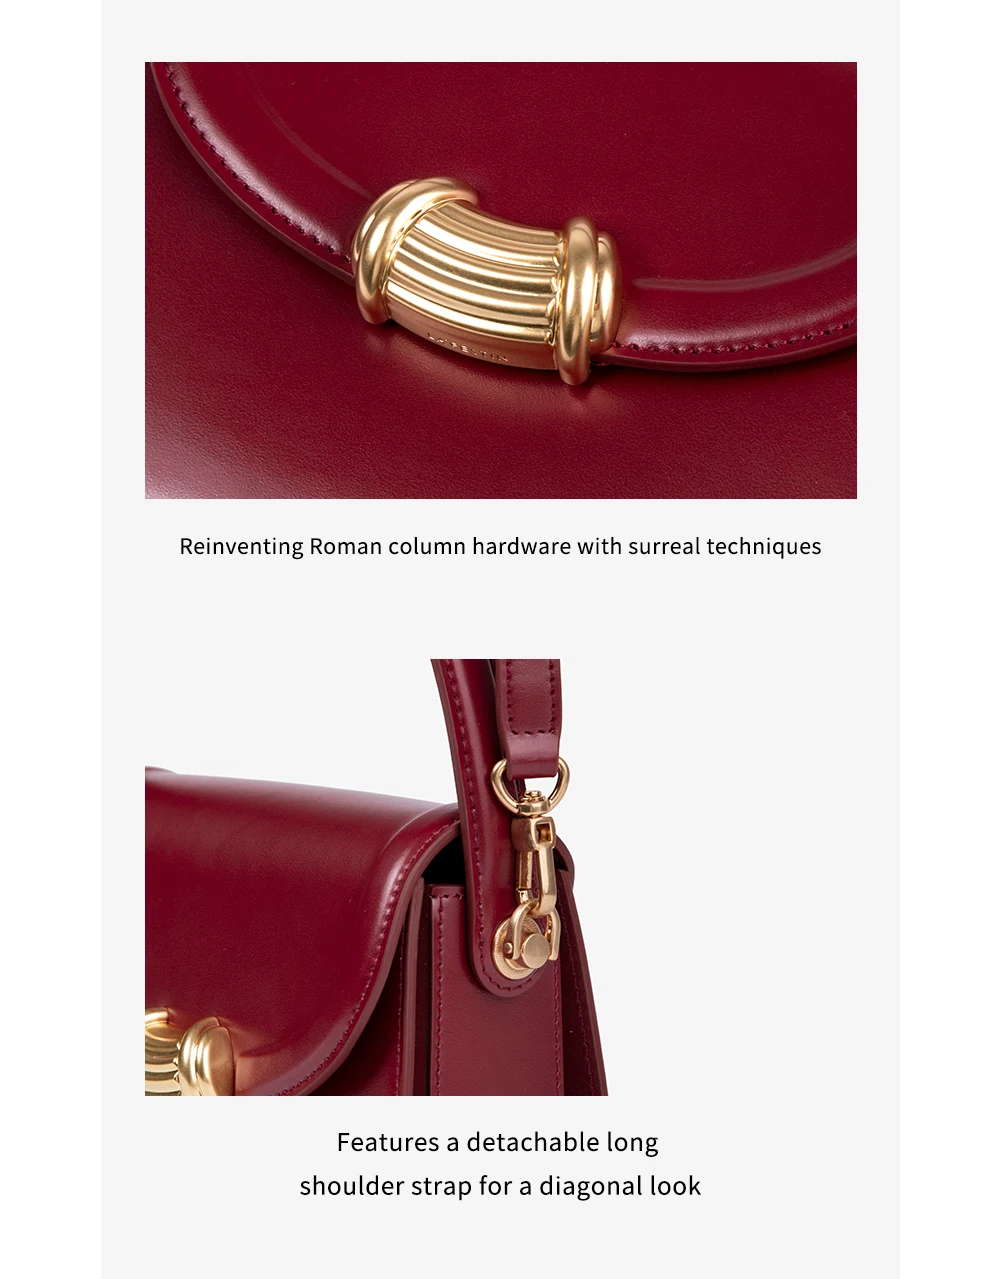 La Festin new high-luxury women’s bag